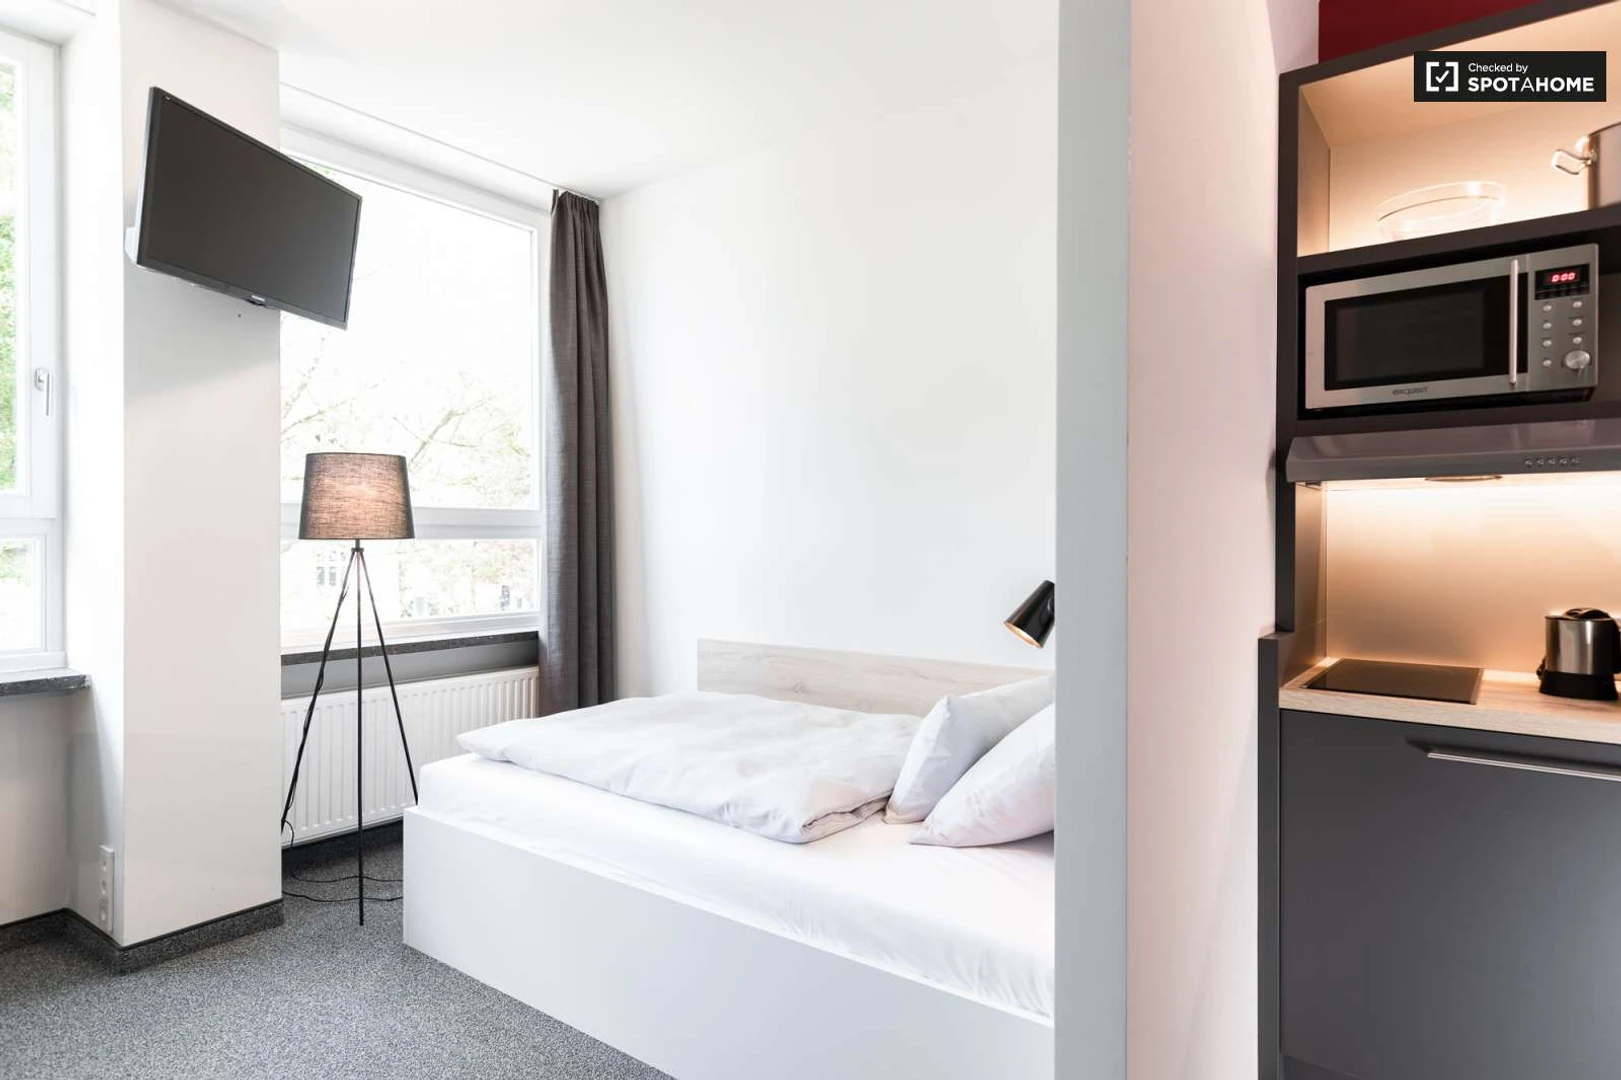 Entire fully furnished flat in Hamburg